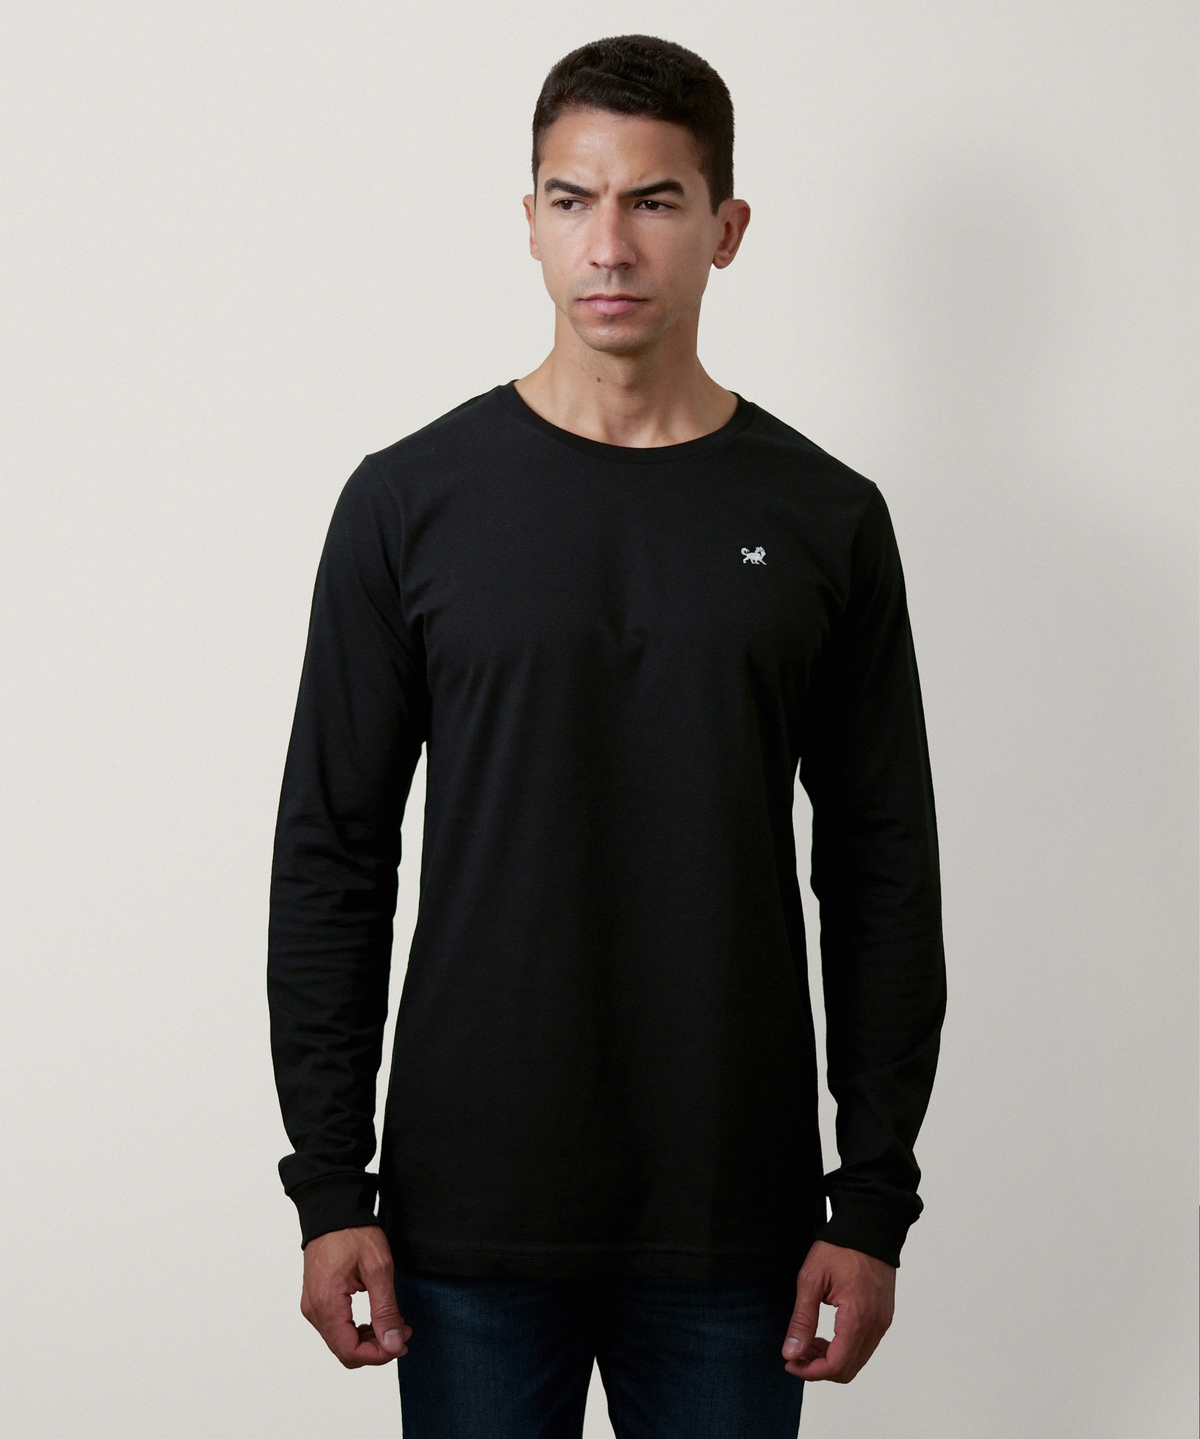 Signature Long Sleeve T-Shirt for Men (Black)